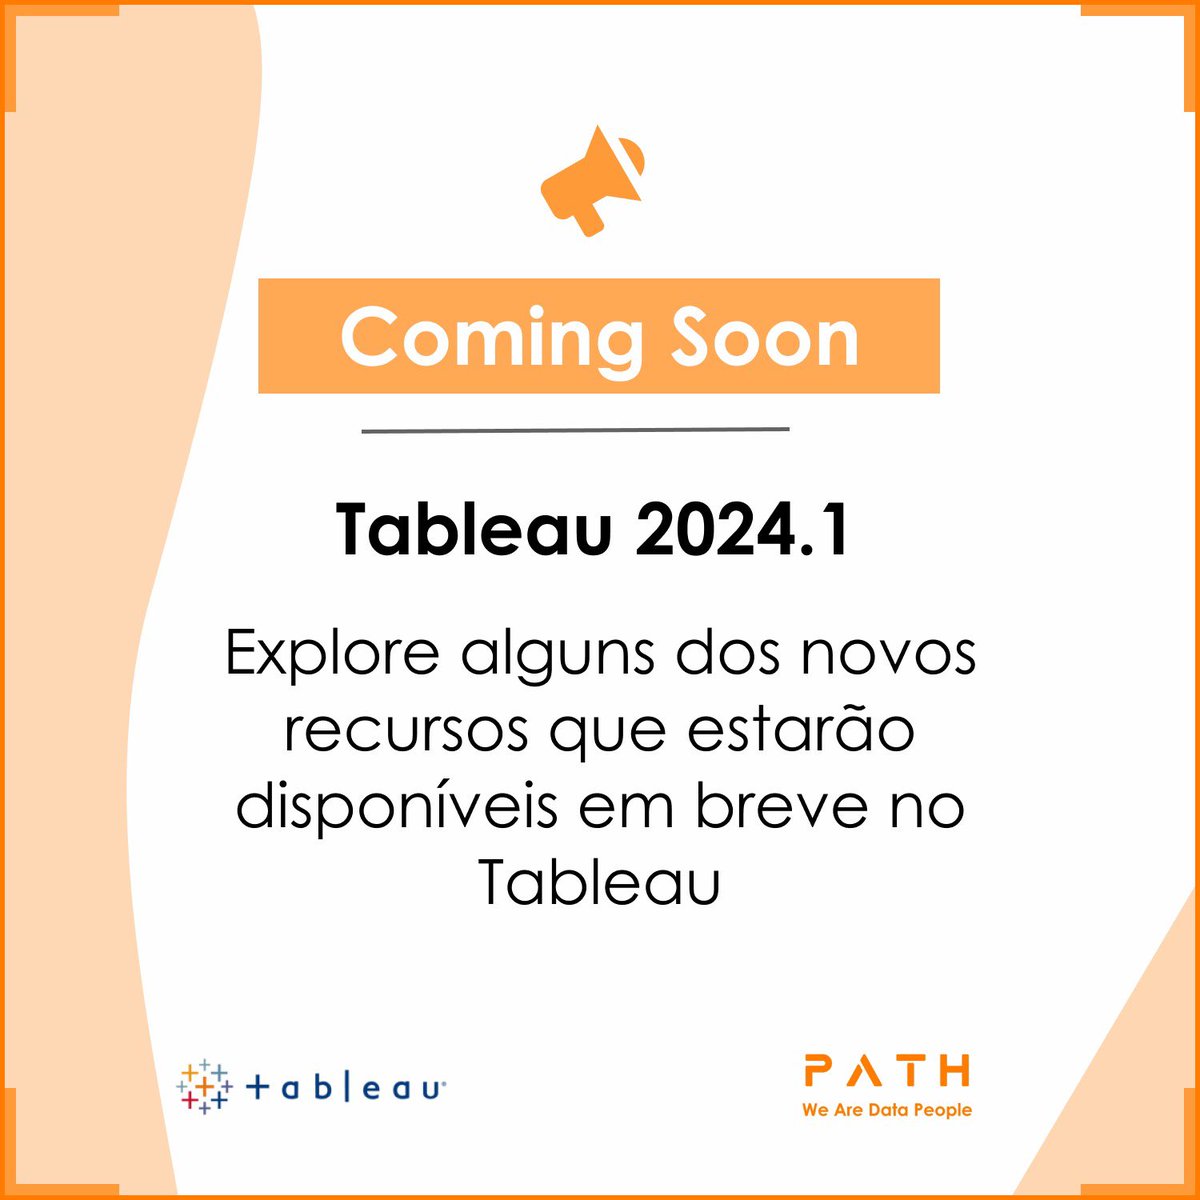 P A T H | Notícias – Coming Soon: Tableau 2024.1
 
 Explore alguns dos novos recursos que estarão disponíveis em breve no Tableau.
 
 Confira a notícia completa no nosso site: cutt.ly/VwXeFJFo

#Tableau #WeAreDataPeople #DataFam #VisualAnalytics #Tableautips #PathDataFan